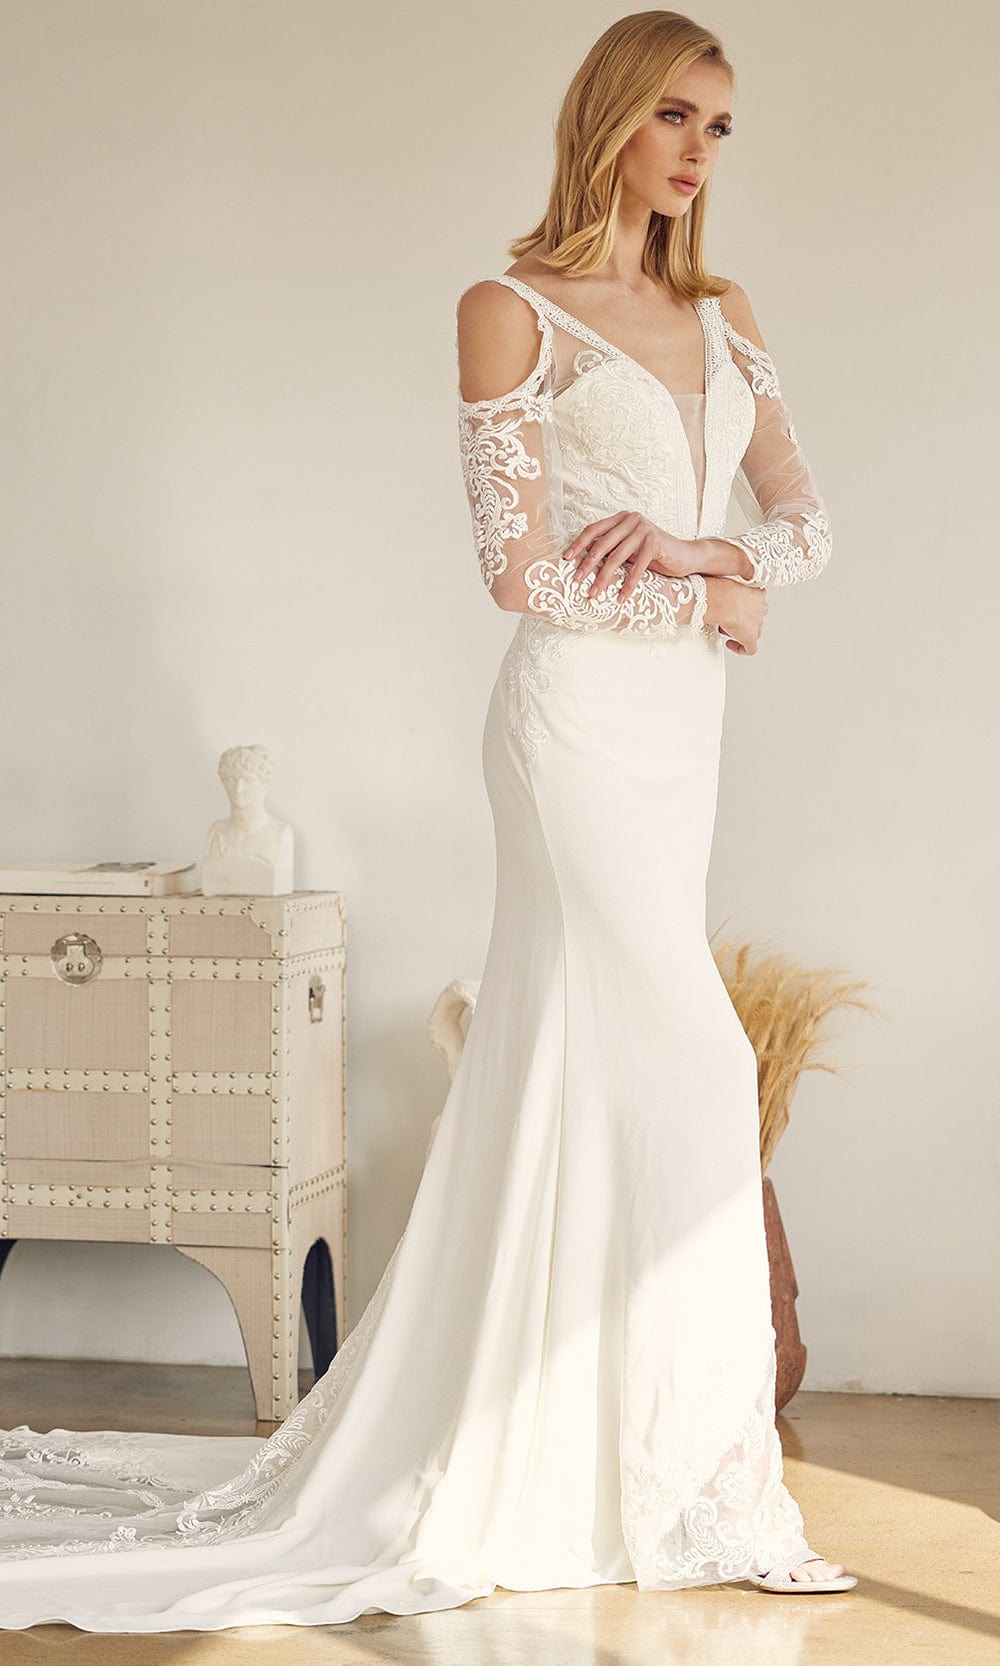 Nox Anabel Bridal JE916 - Long Sleeve Bridal Gown Bridal Dresses